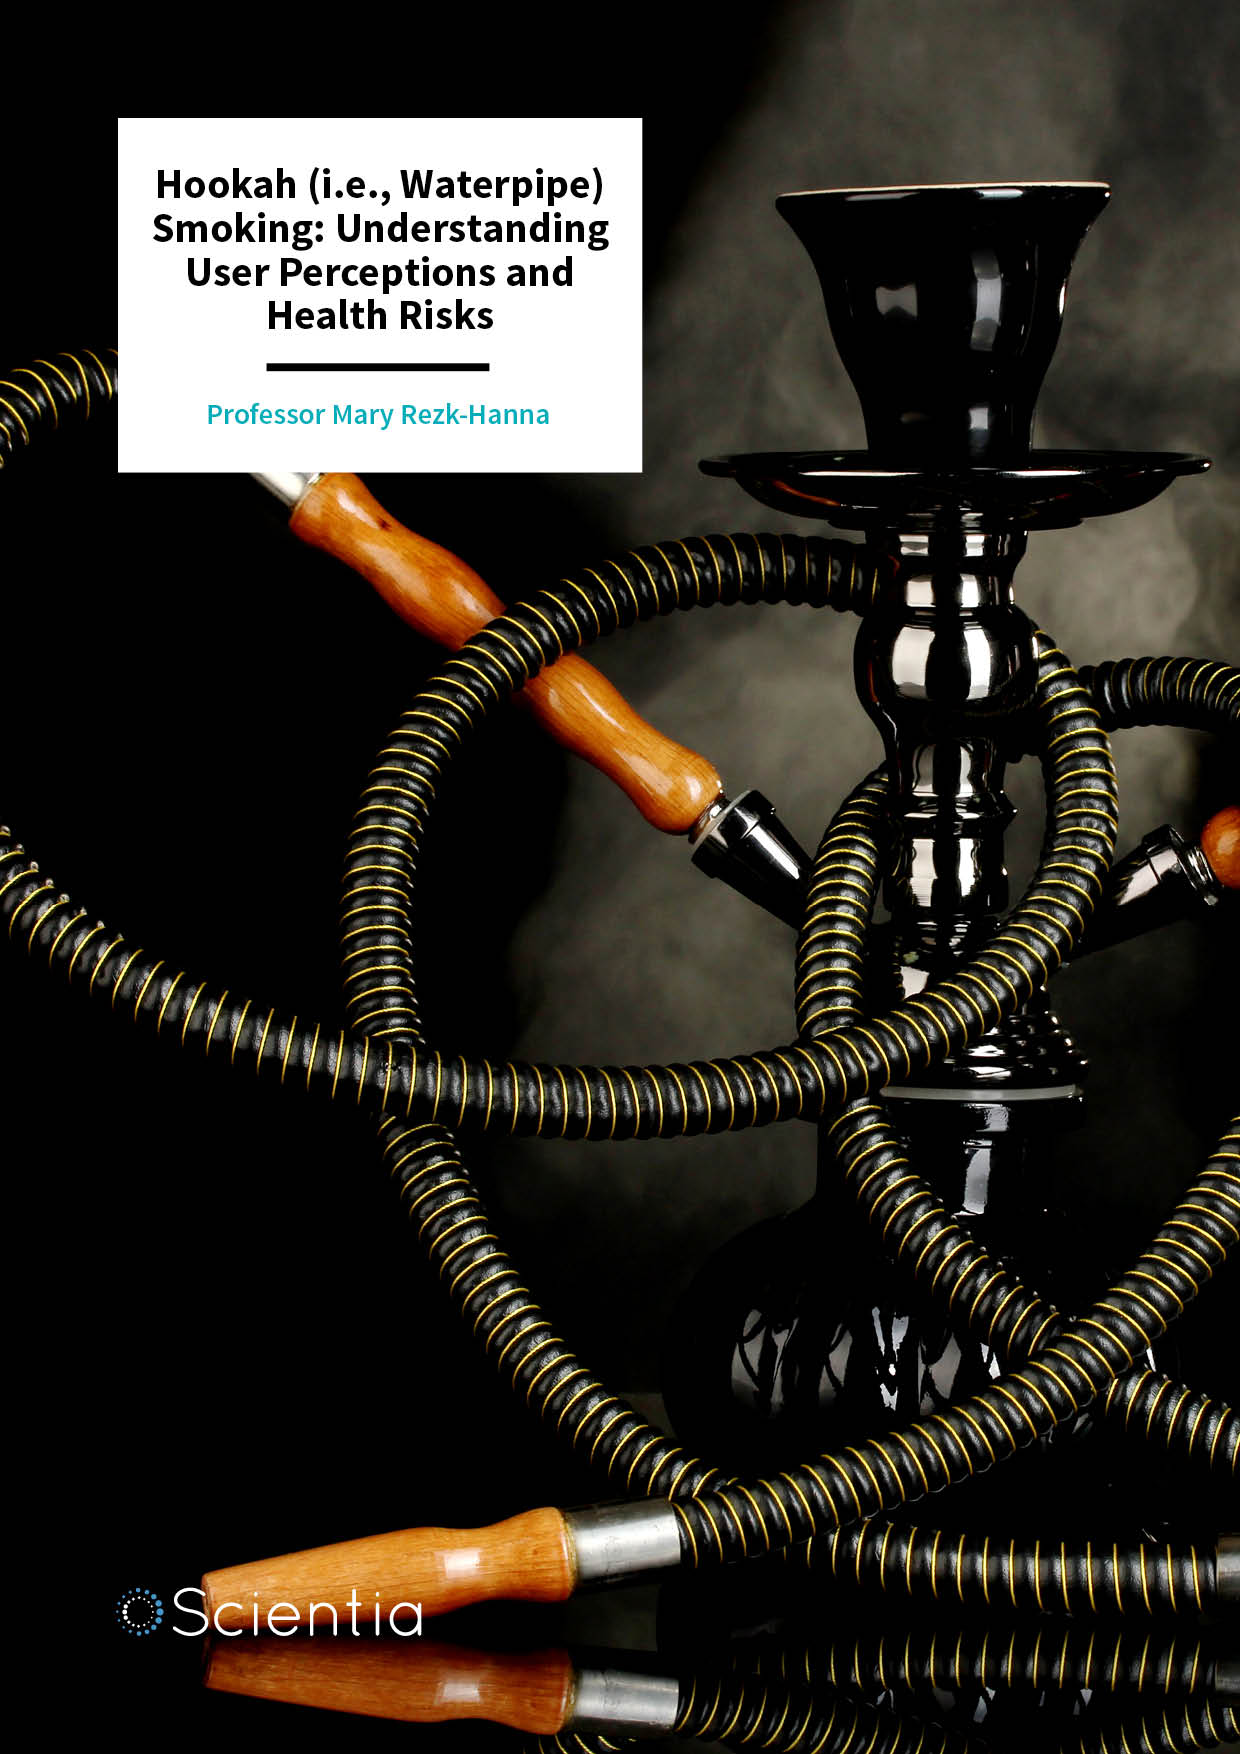 Professor Mary Rezk-Hanna – Hookah (i.e., Waterpipe) Smoking: Understanding User Perceptions and Health Risks